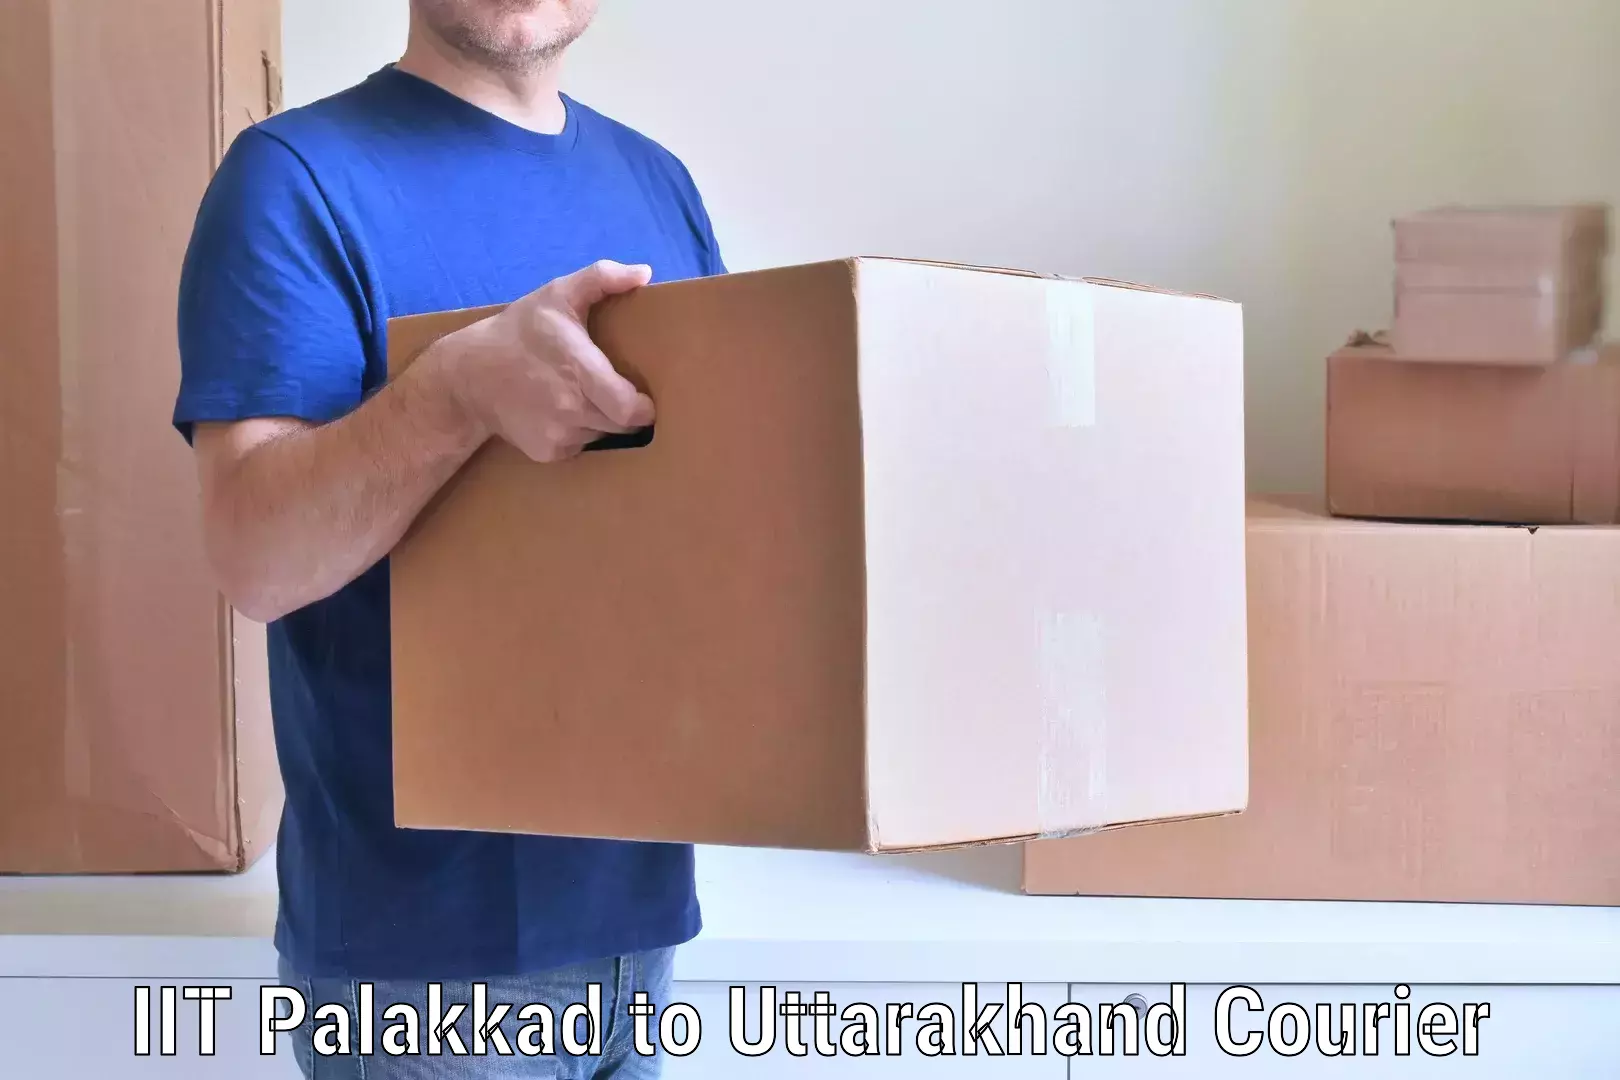 Customized relocation services IIT Palakkad to Rishikesh